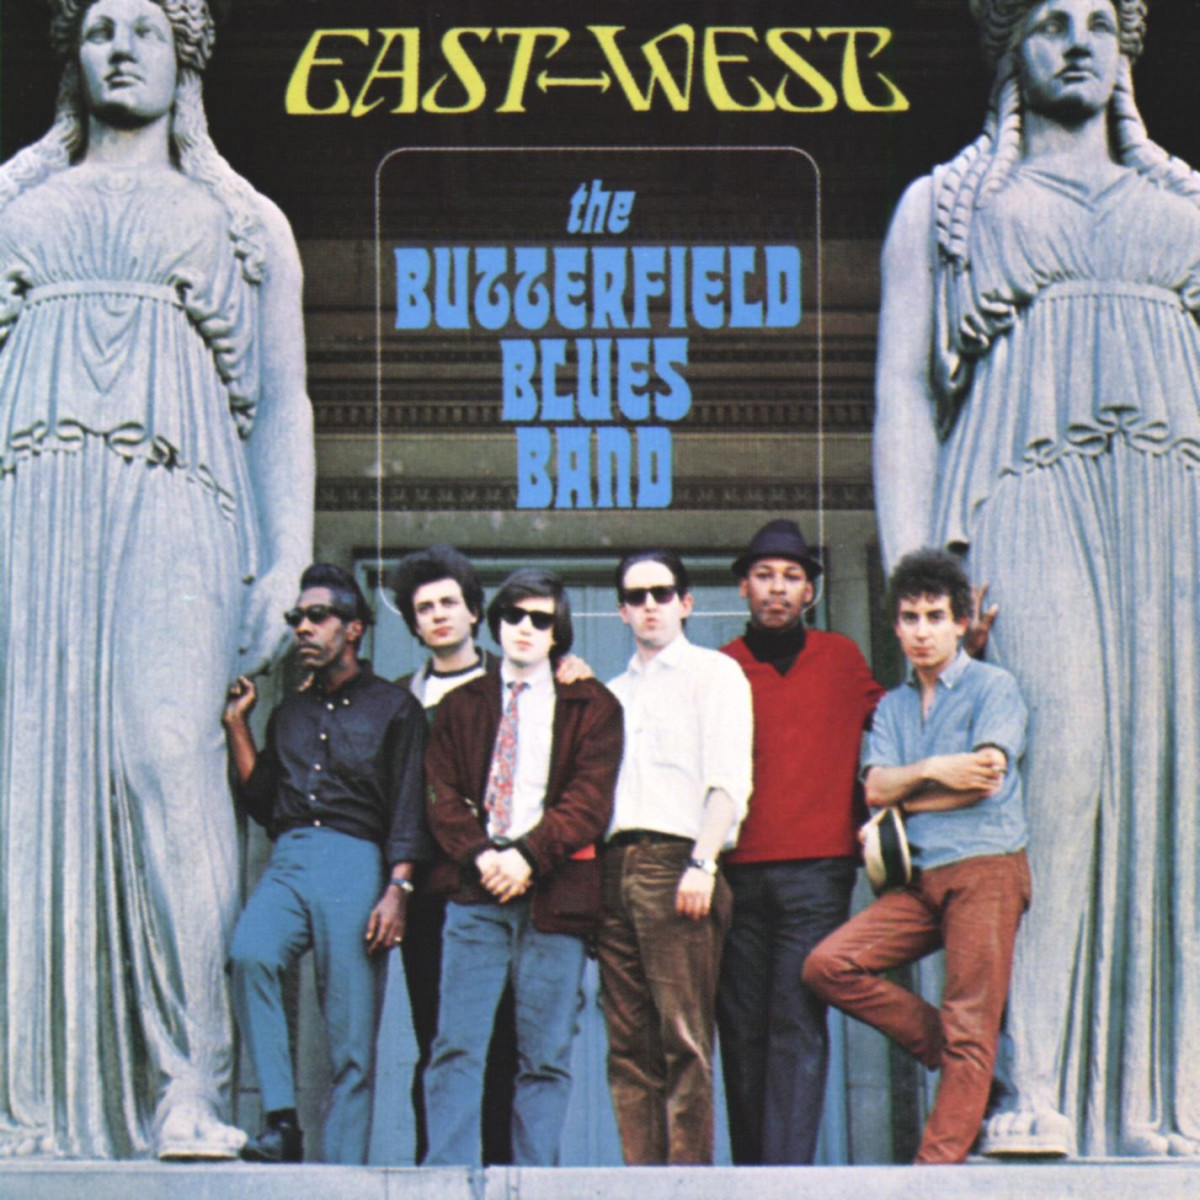 Paul Butterfield Blues Band East